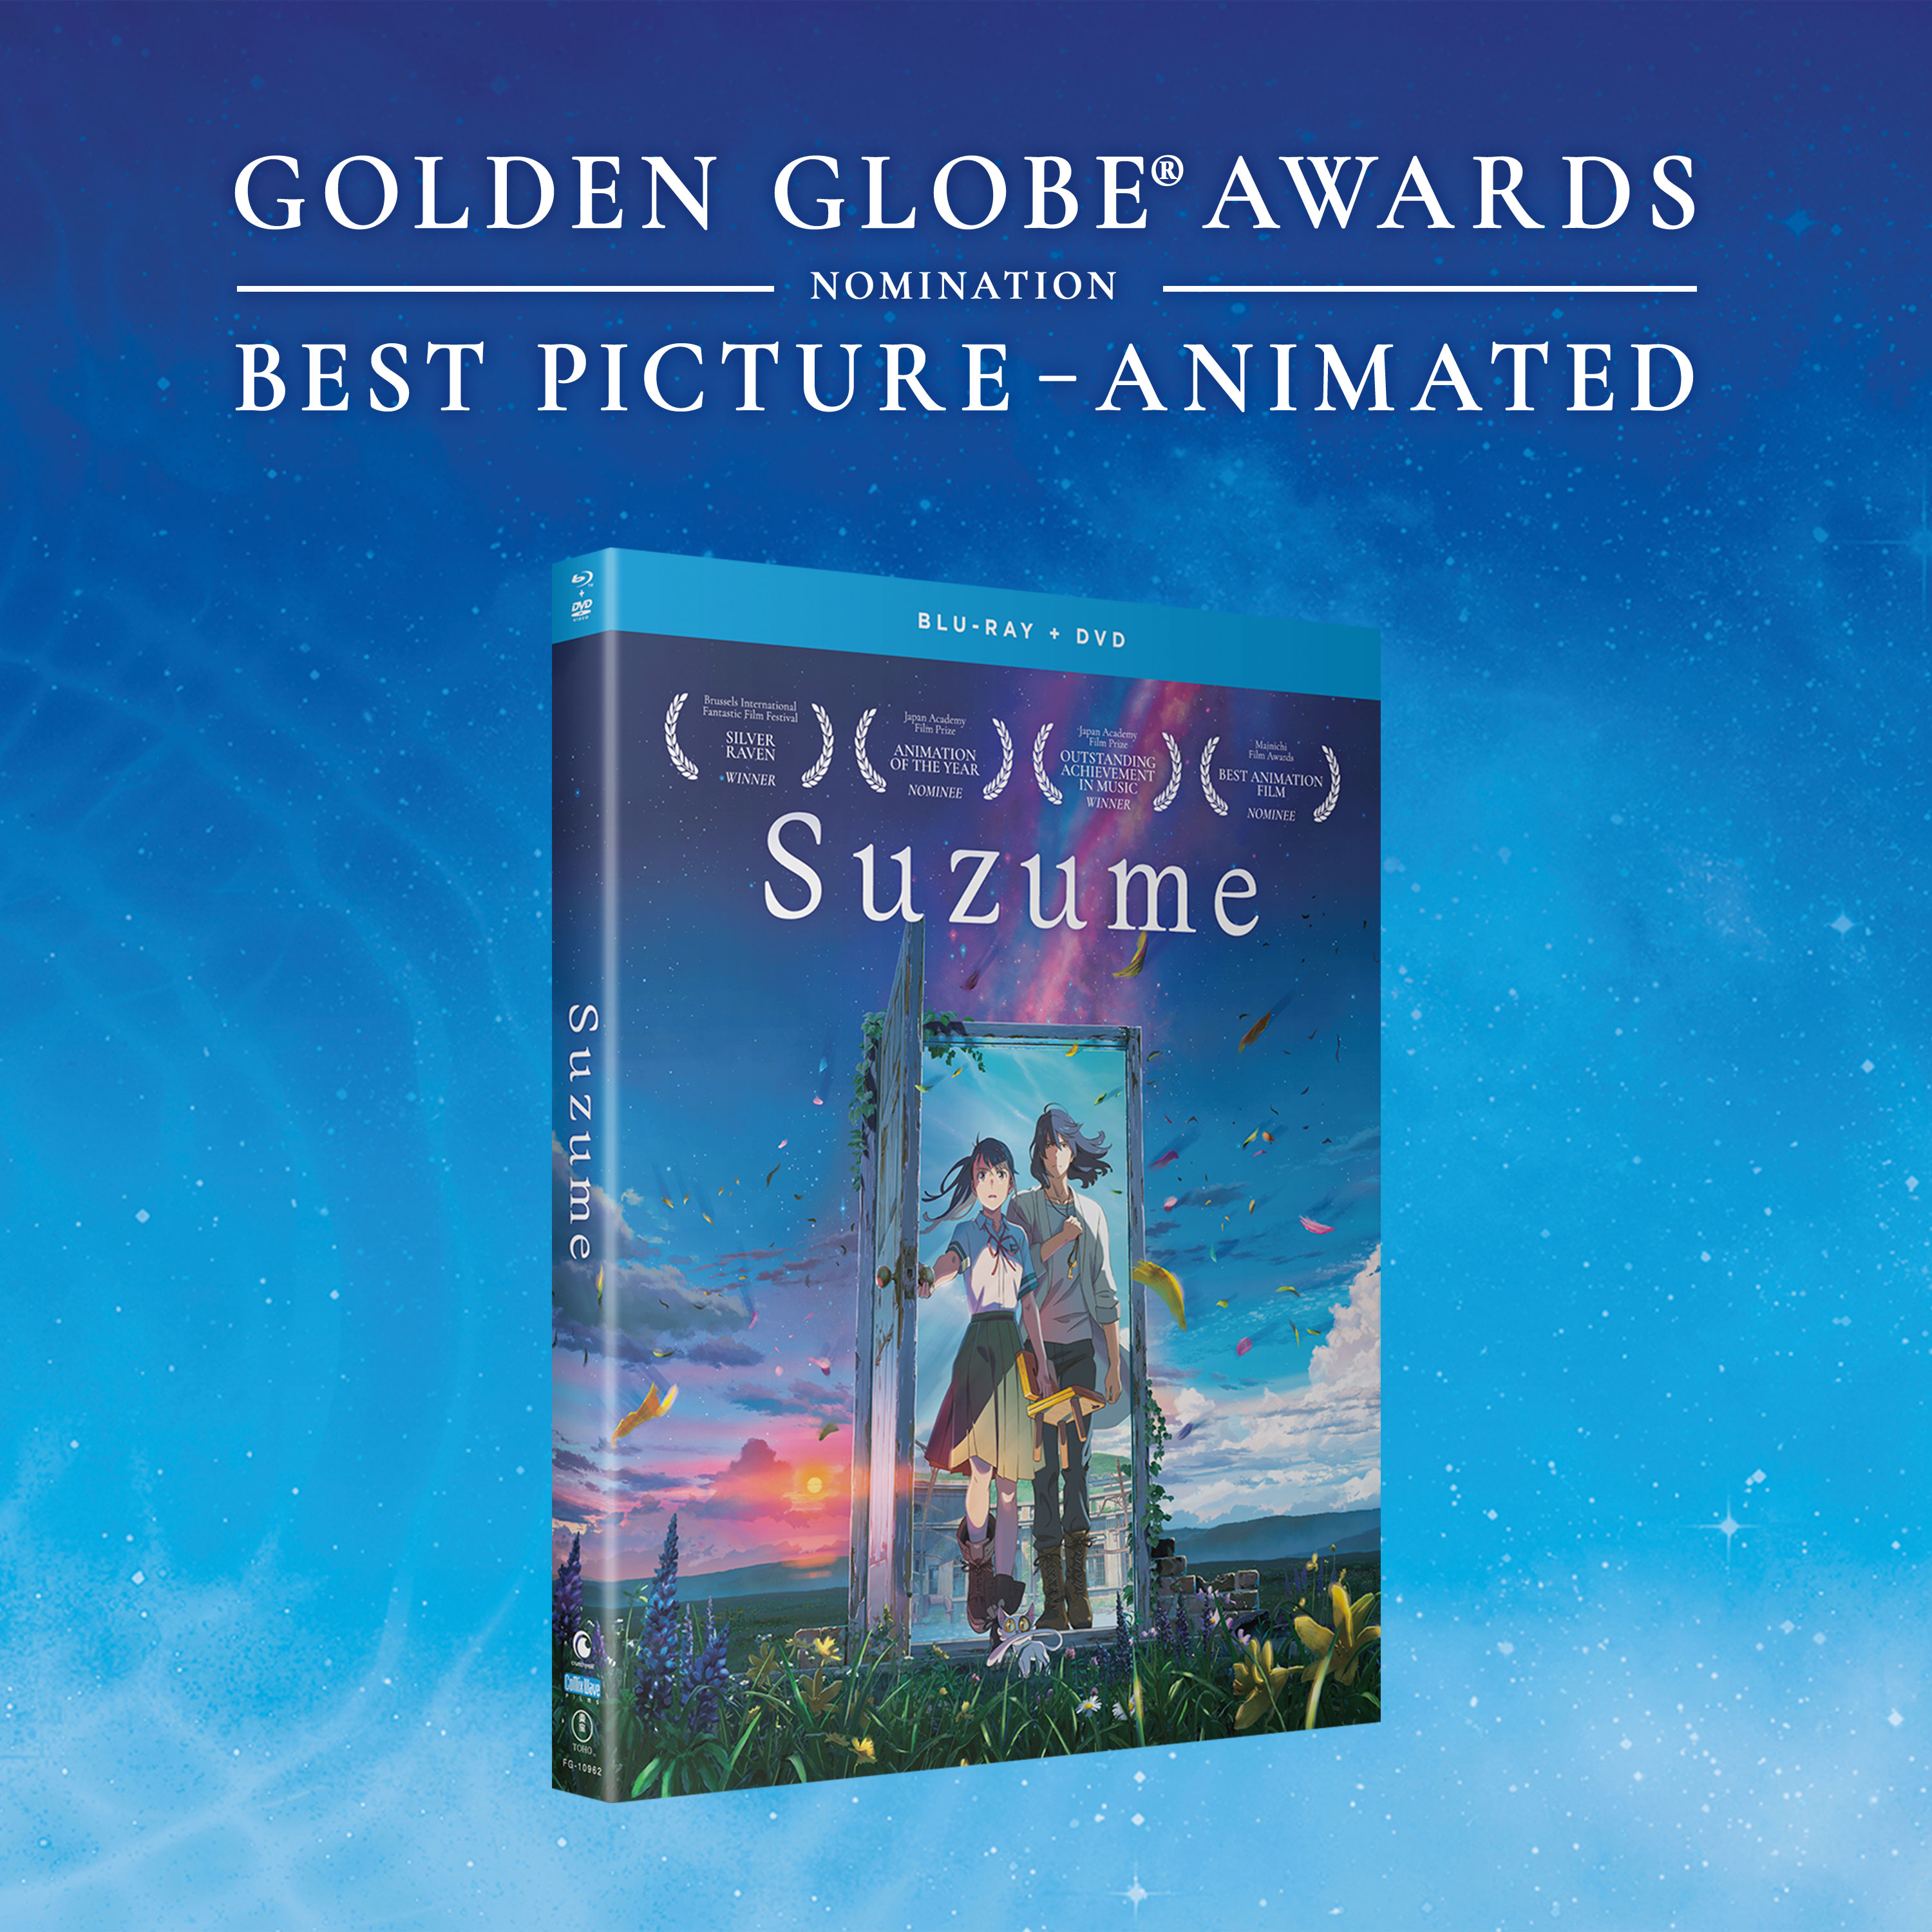 Suzume - Movie - Blu-ray + DVD image count 0